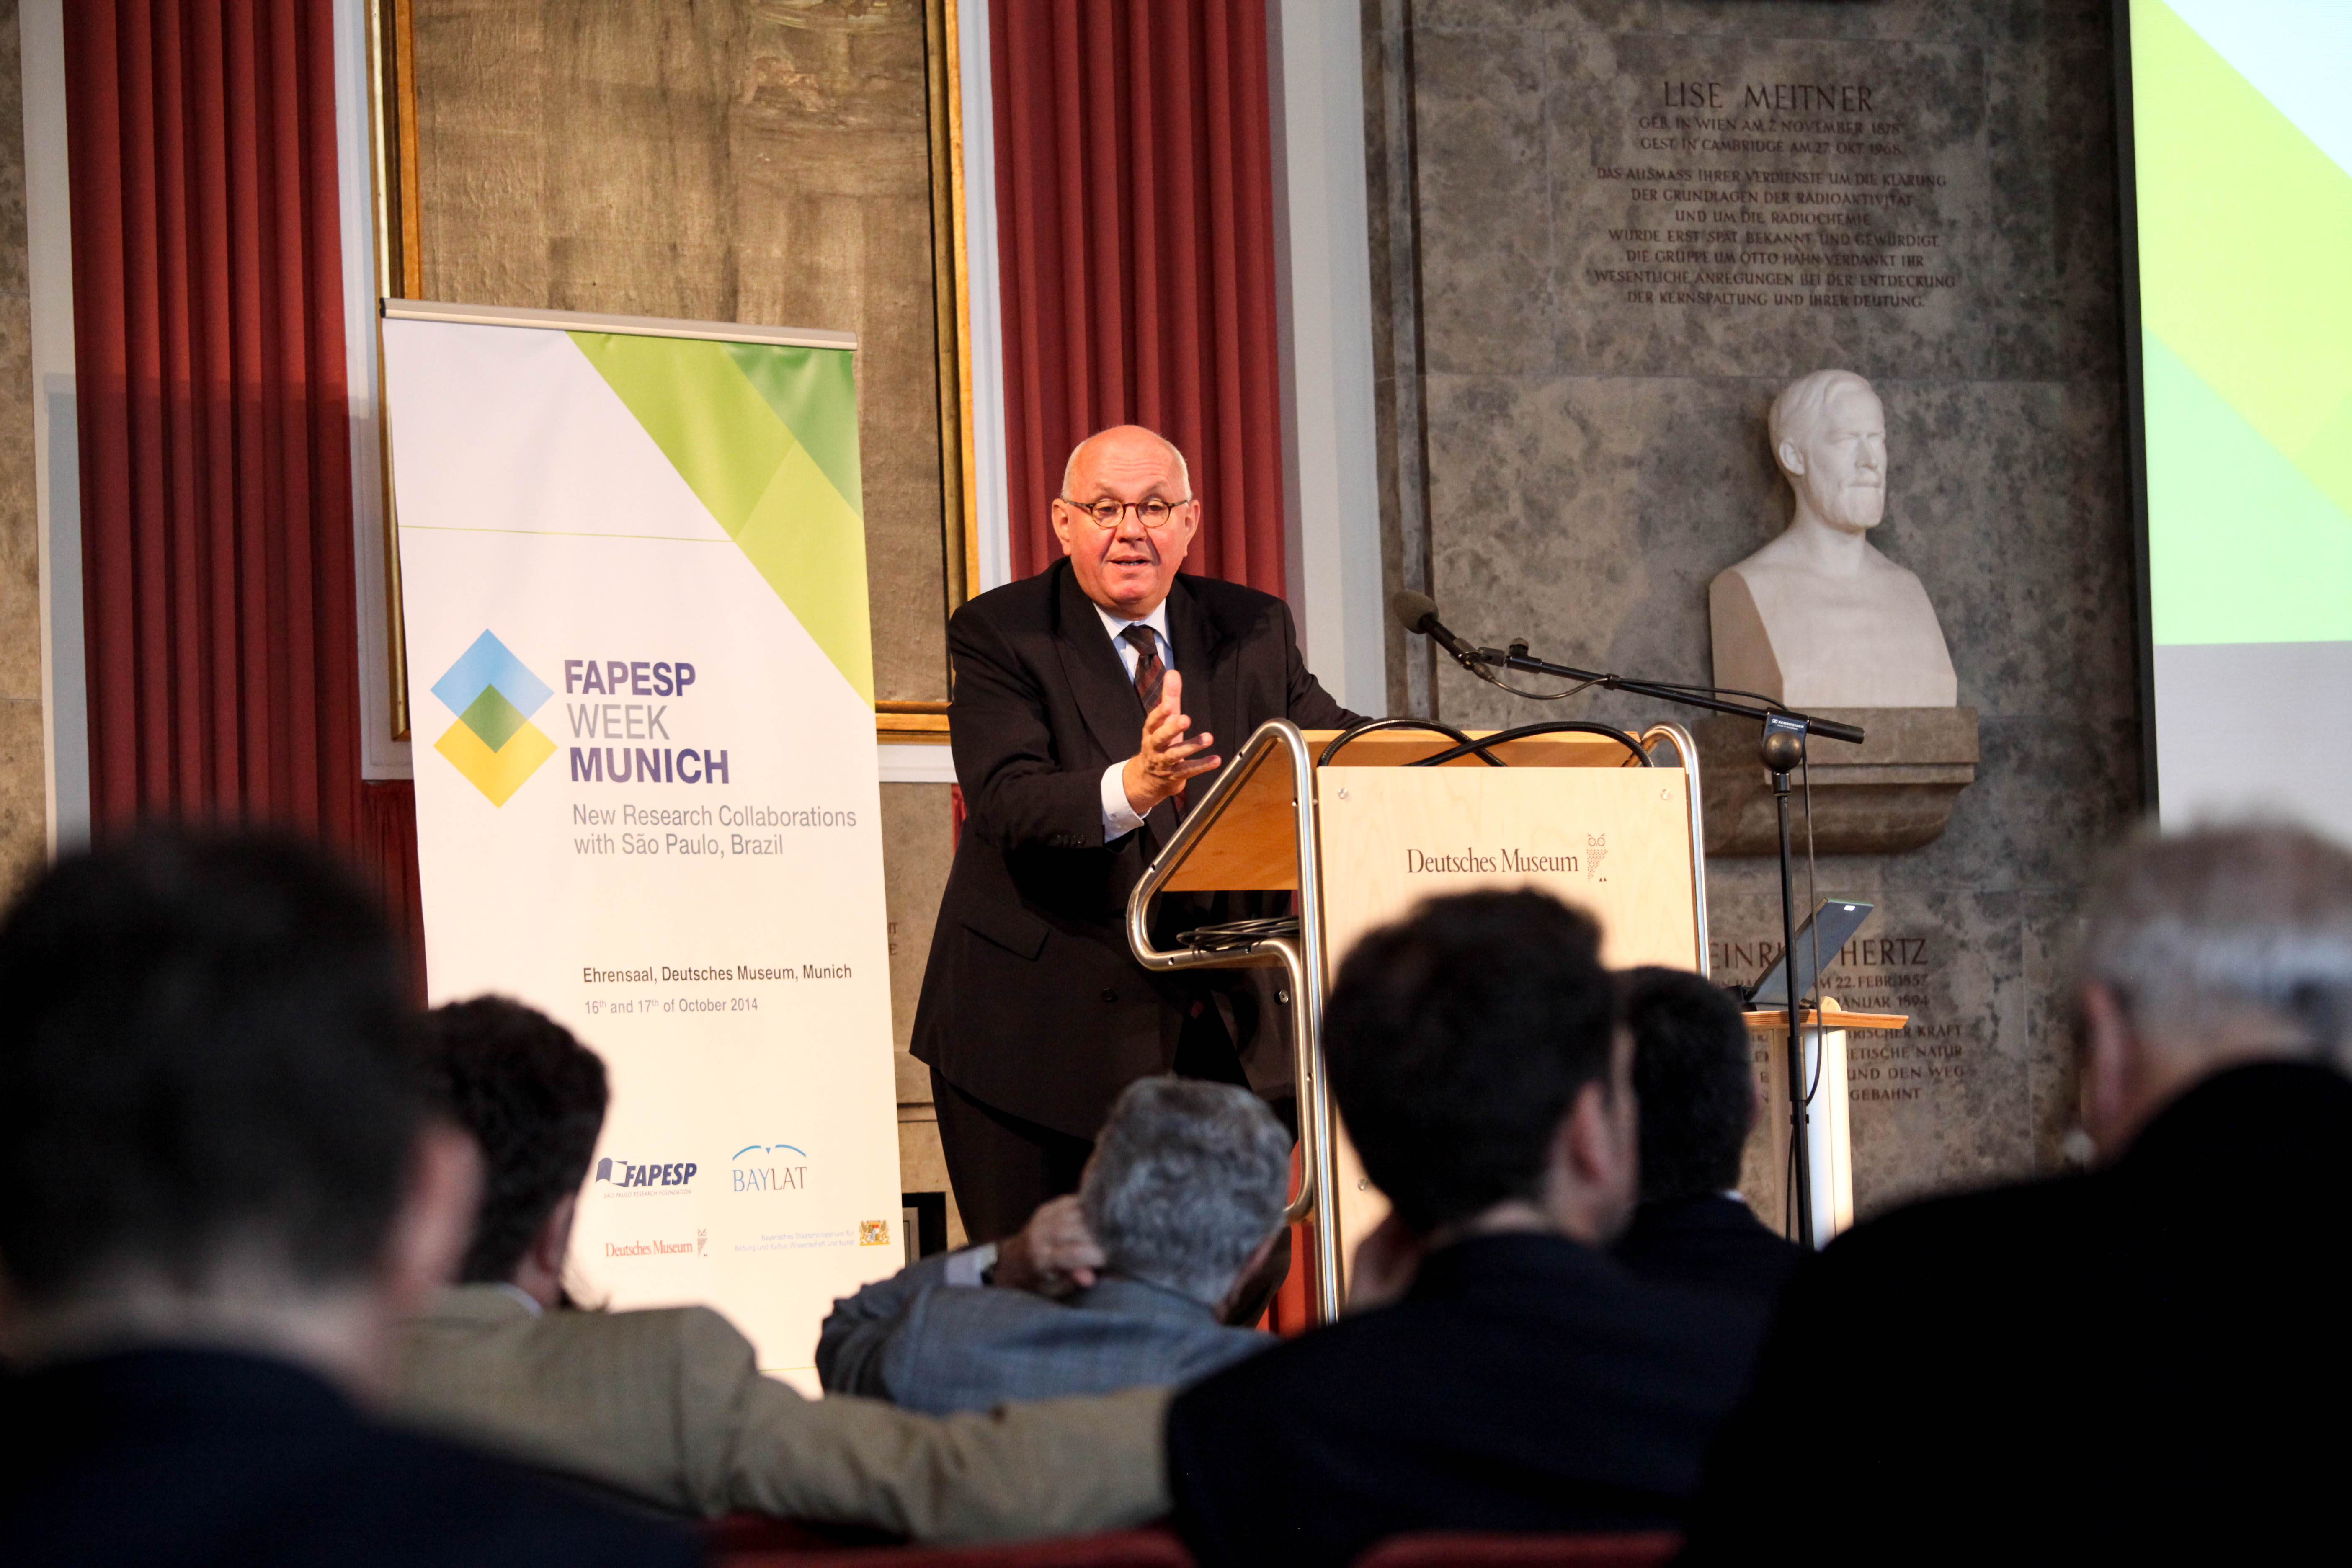 O Presidente da DFG, Prof. Dr. Peter Strohschneider, durante sua palestra inaugural na FAPESP Week Munich